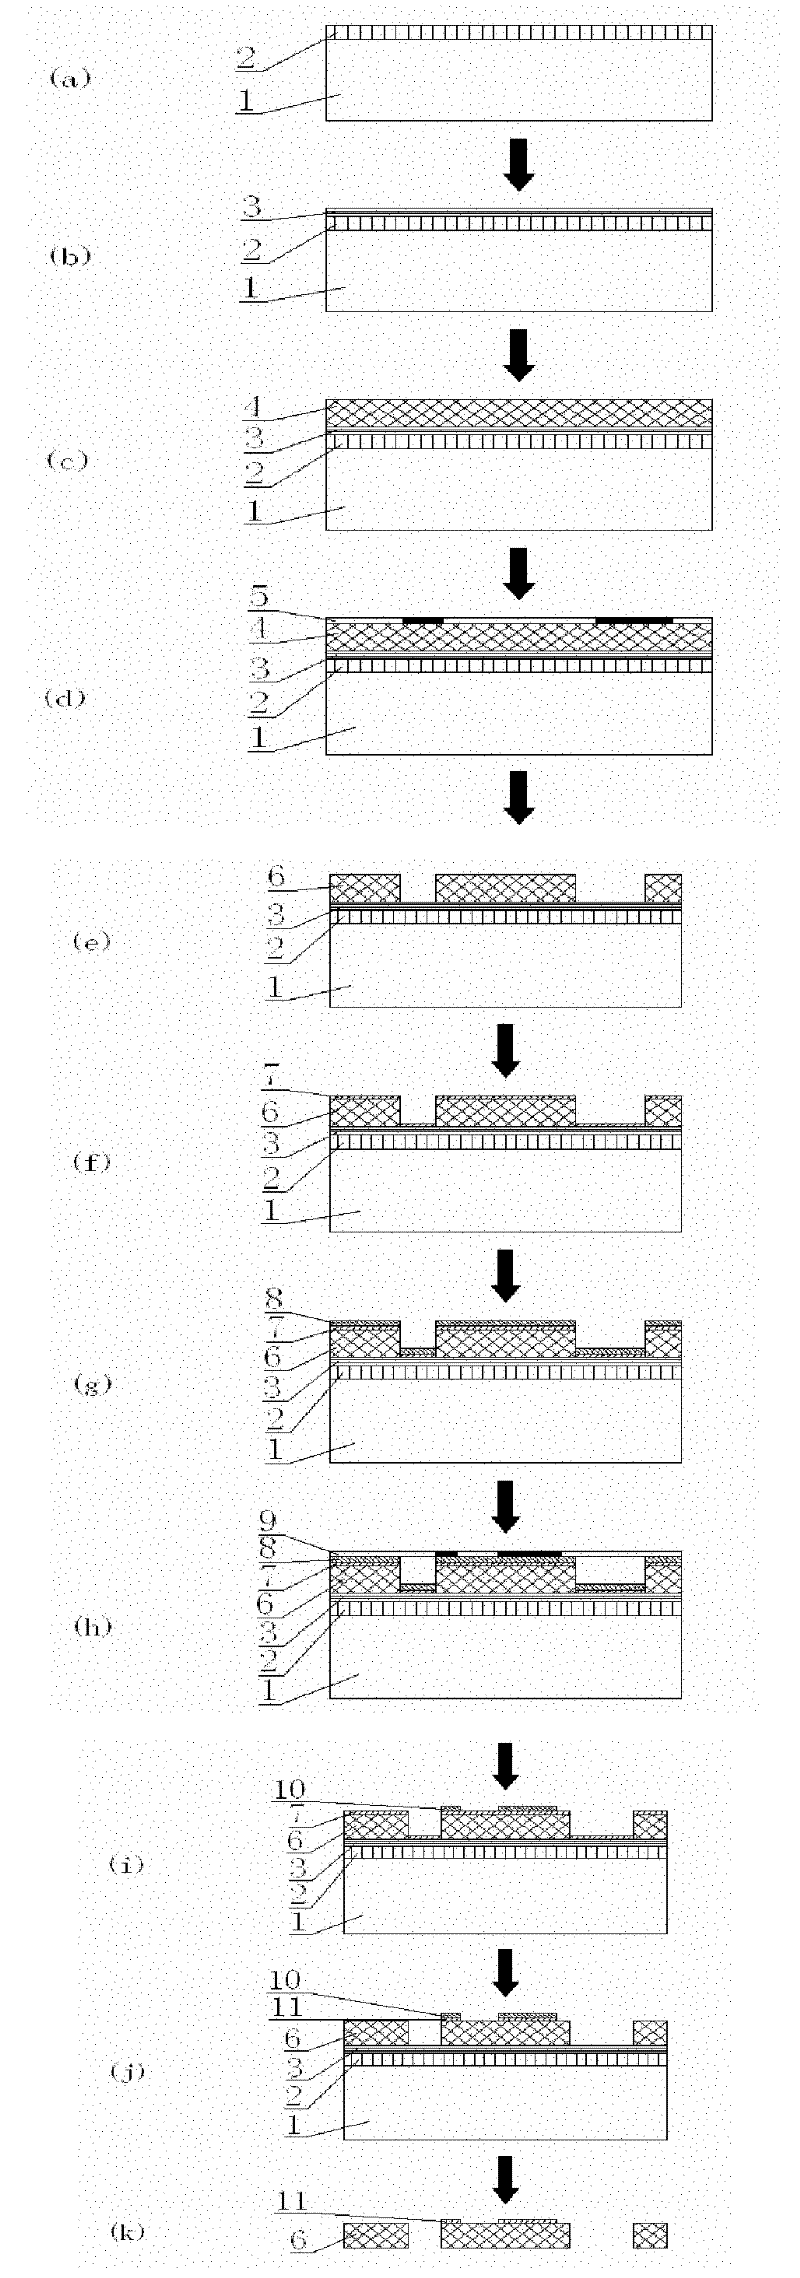 Manufacturing method of SU-8 photoresist micro-force sensor